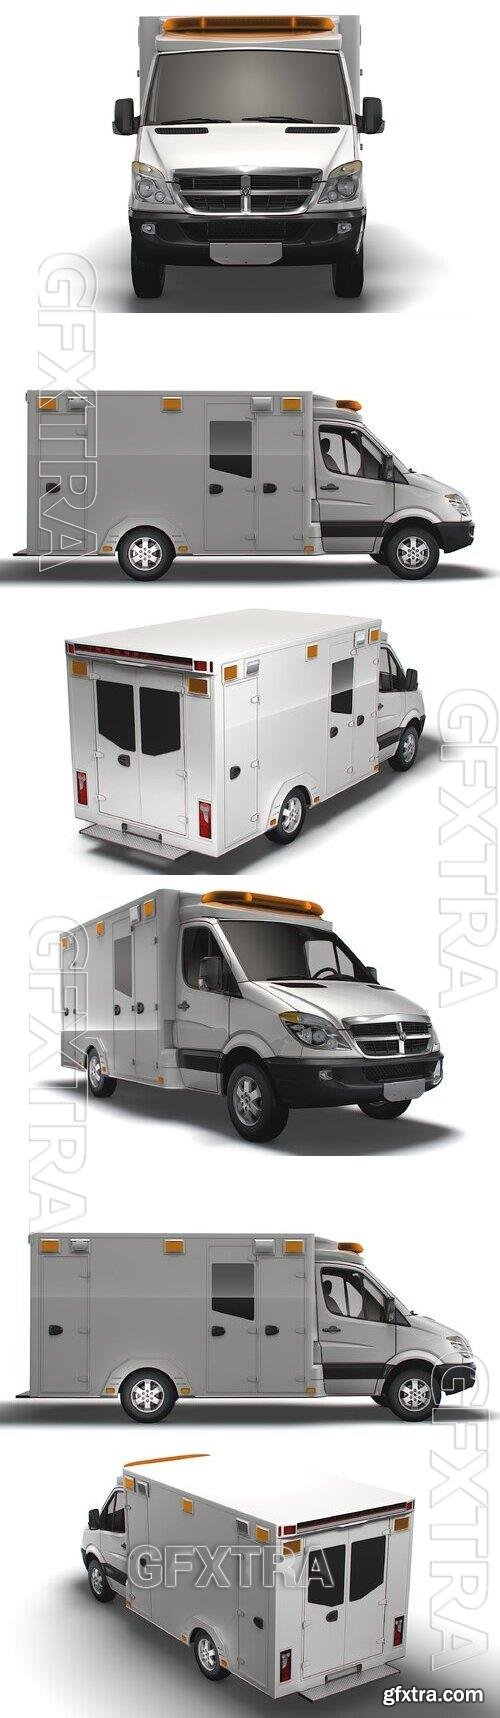 Dodge Sprinter Ambulance 2009 Model